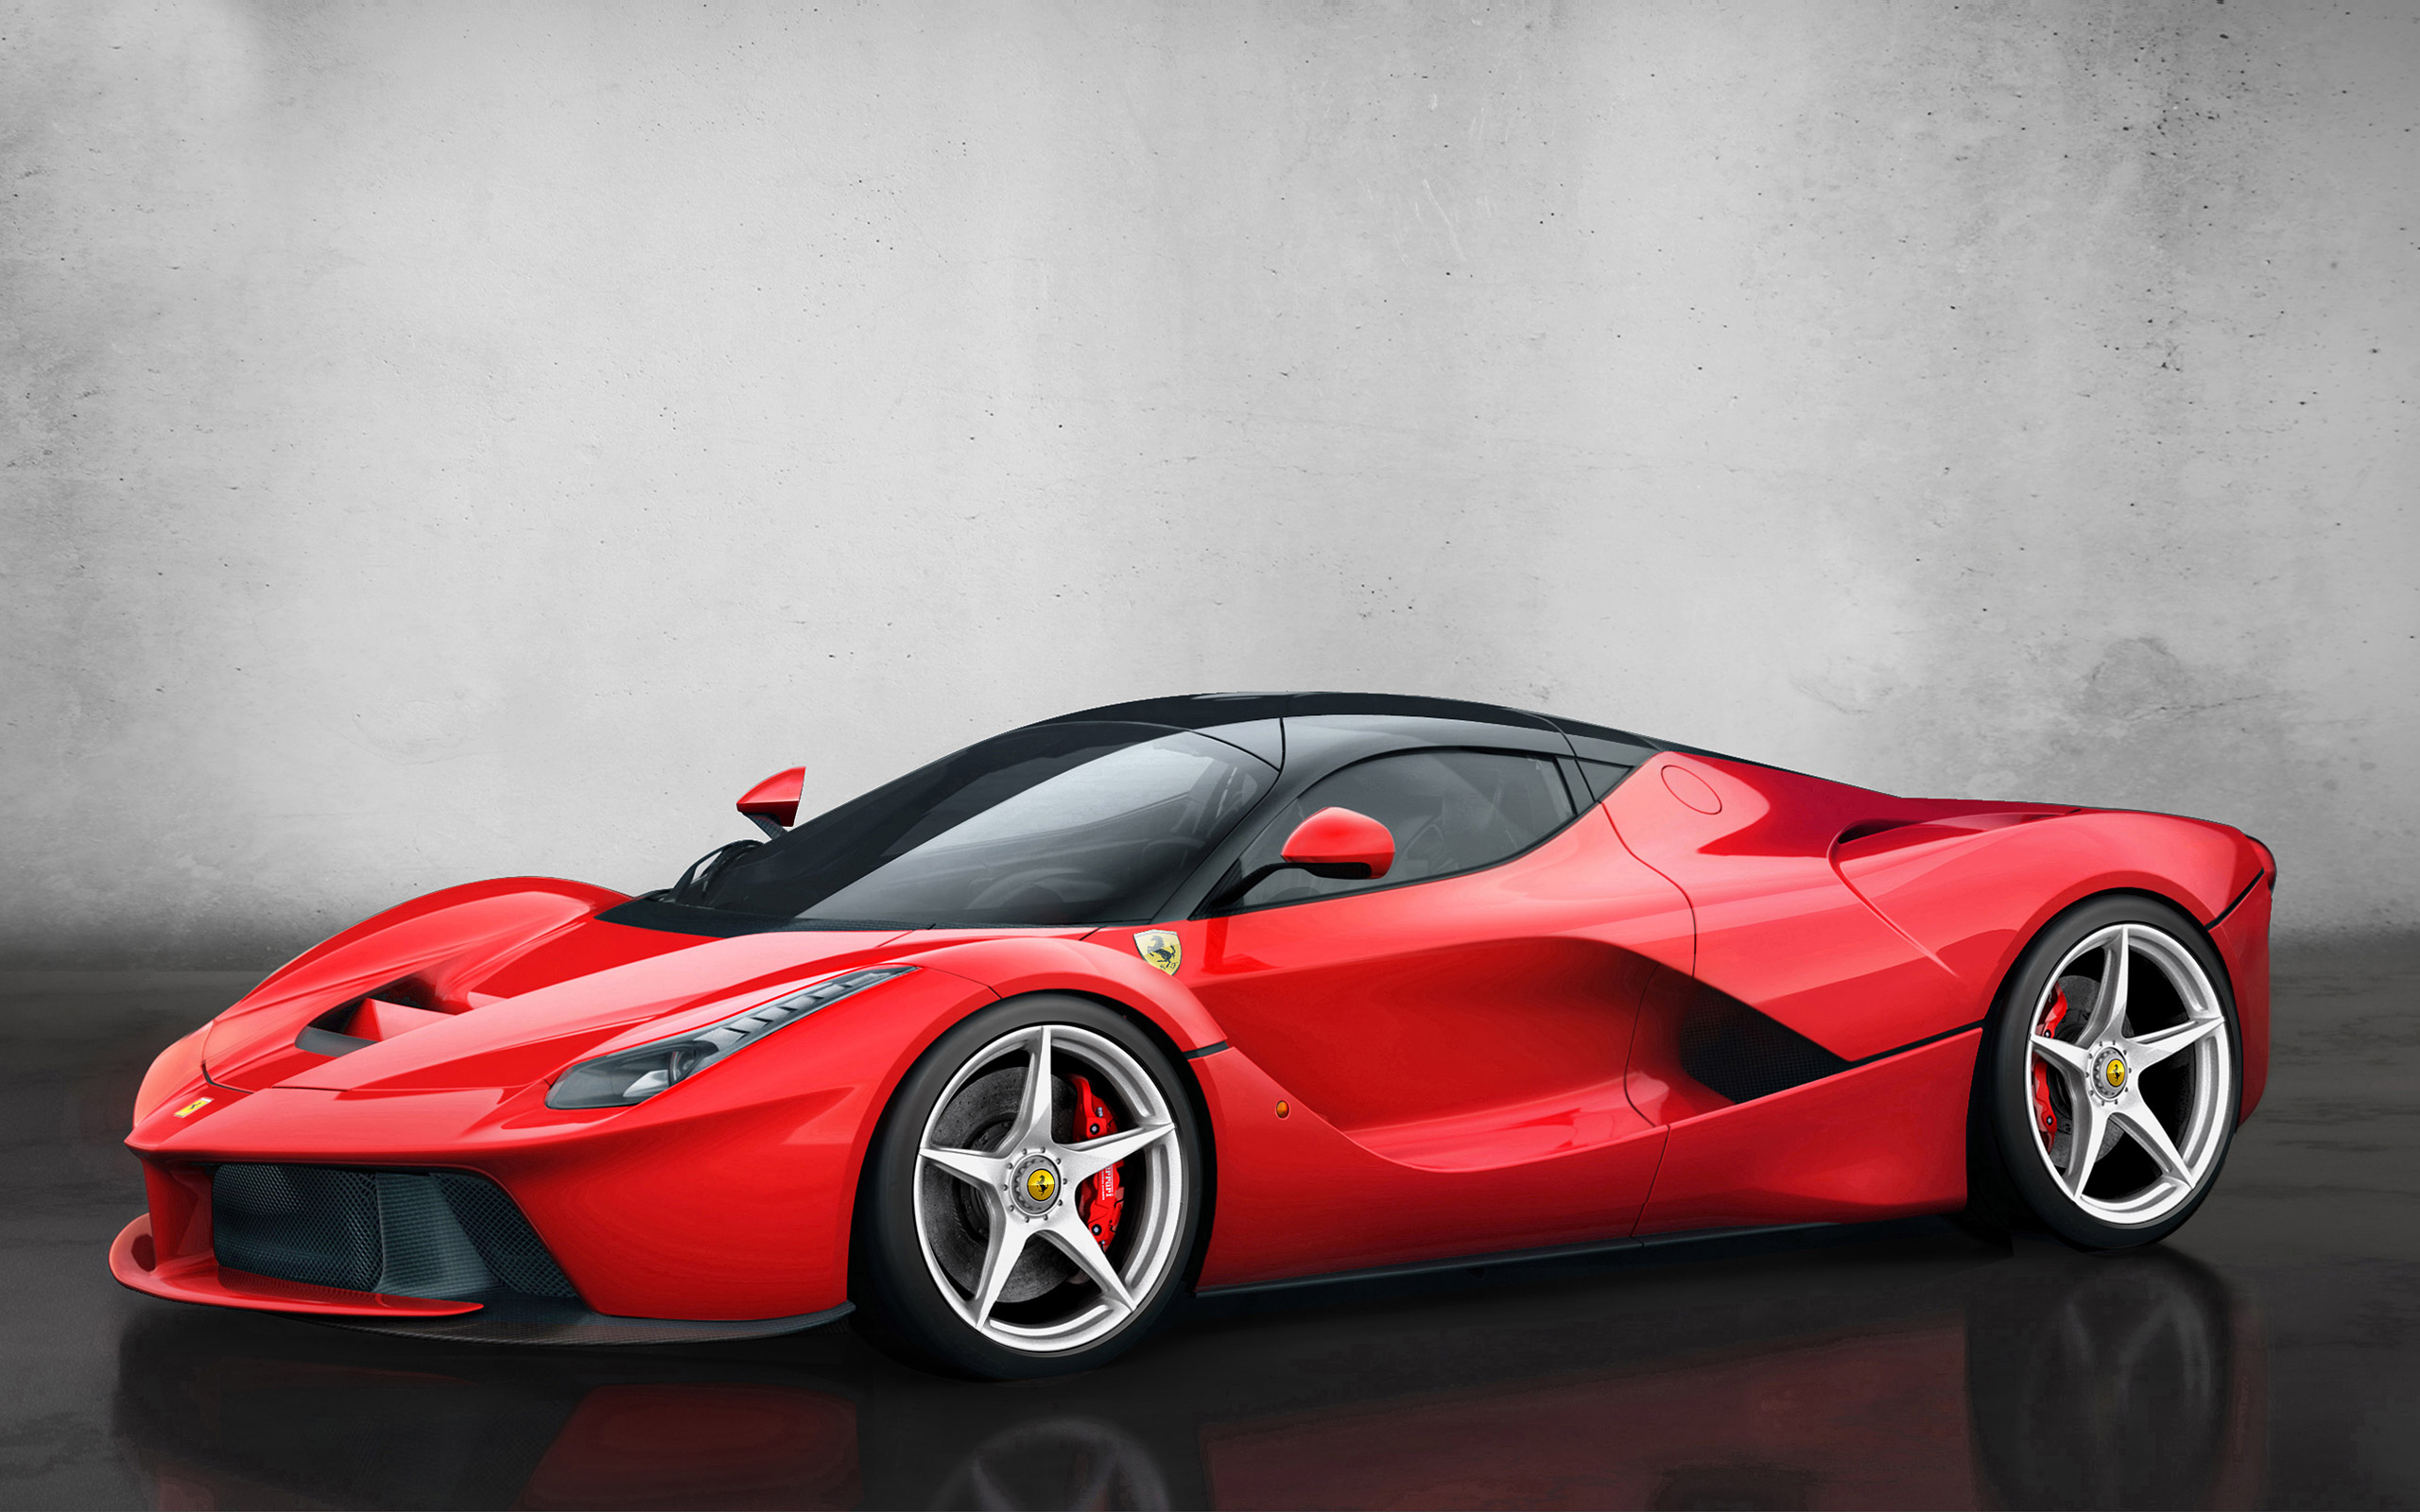  2014 Ferrari LaFerrari Wallpaper.